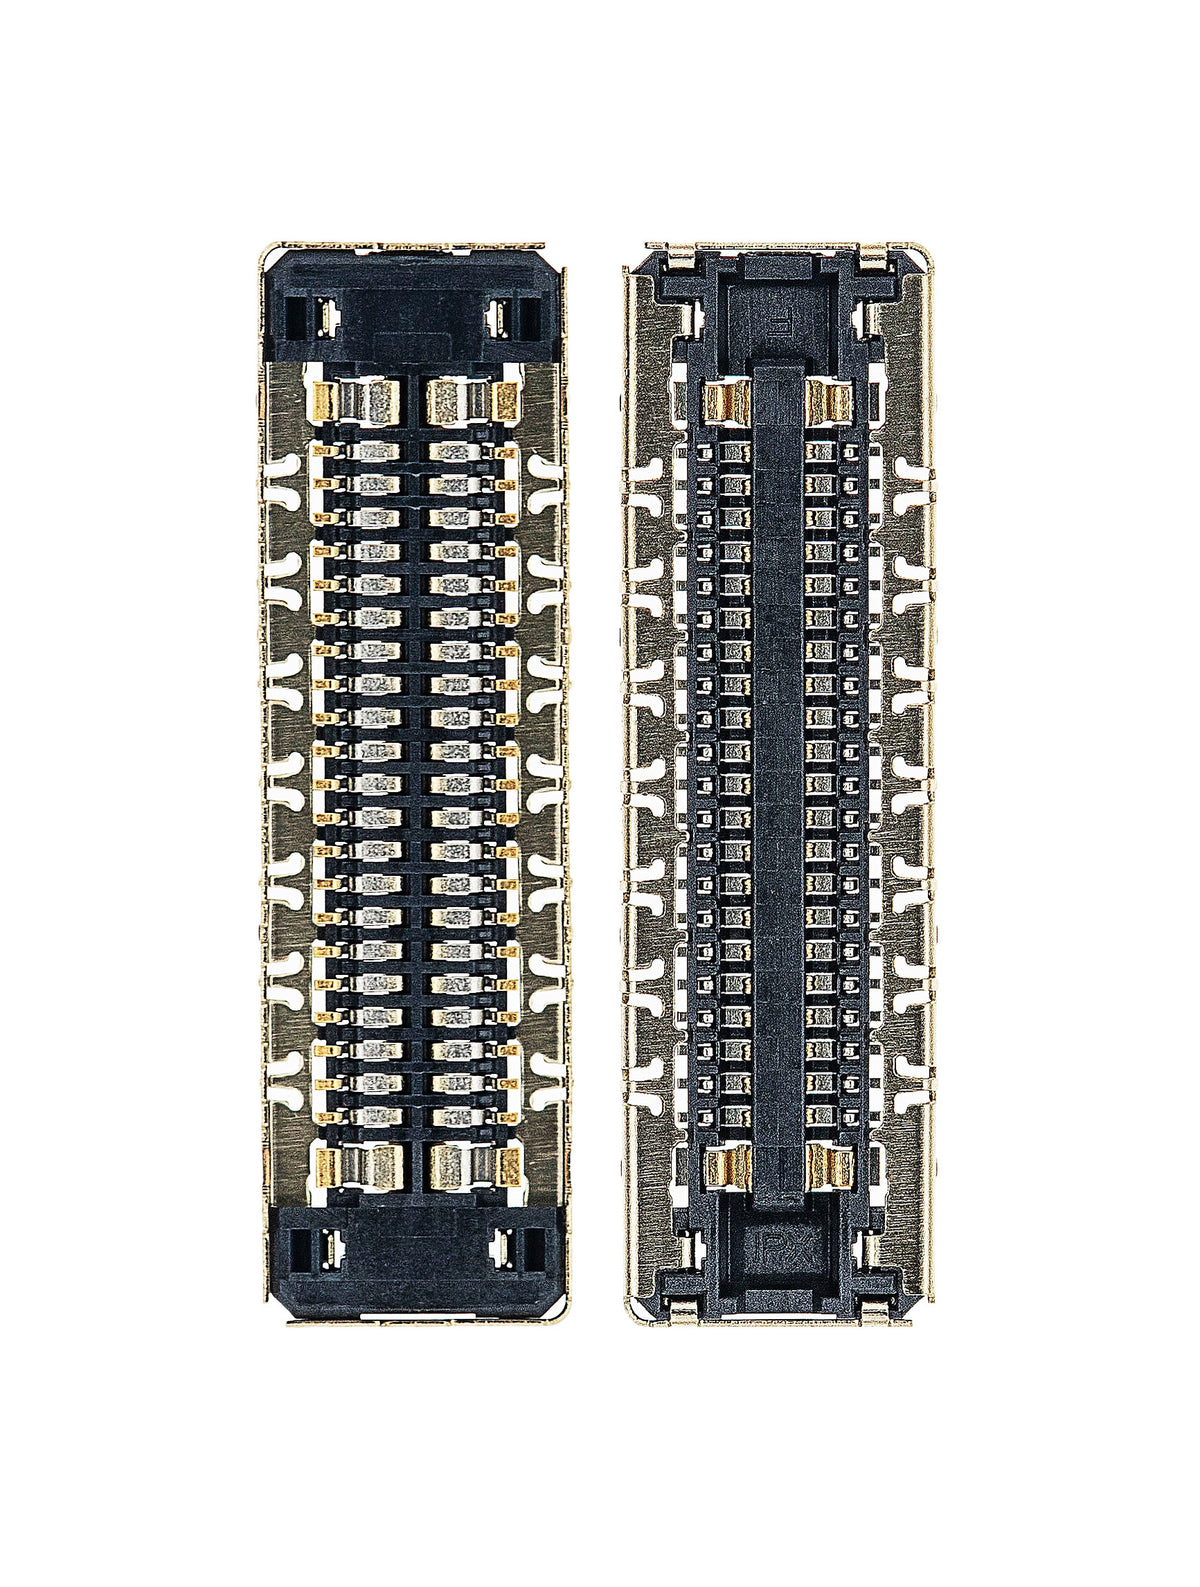 LCD FPC CONNECTOR (42 PIN) FOR MACBOOK PRO RETINA 13" / 15" / AIR 13" (A1706 / A1707 / A1708 / A1989 / A2159 / A2251 / A2289 / A1990 / A1932 / A2179)